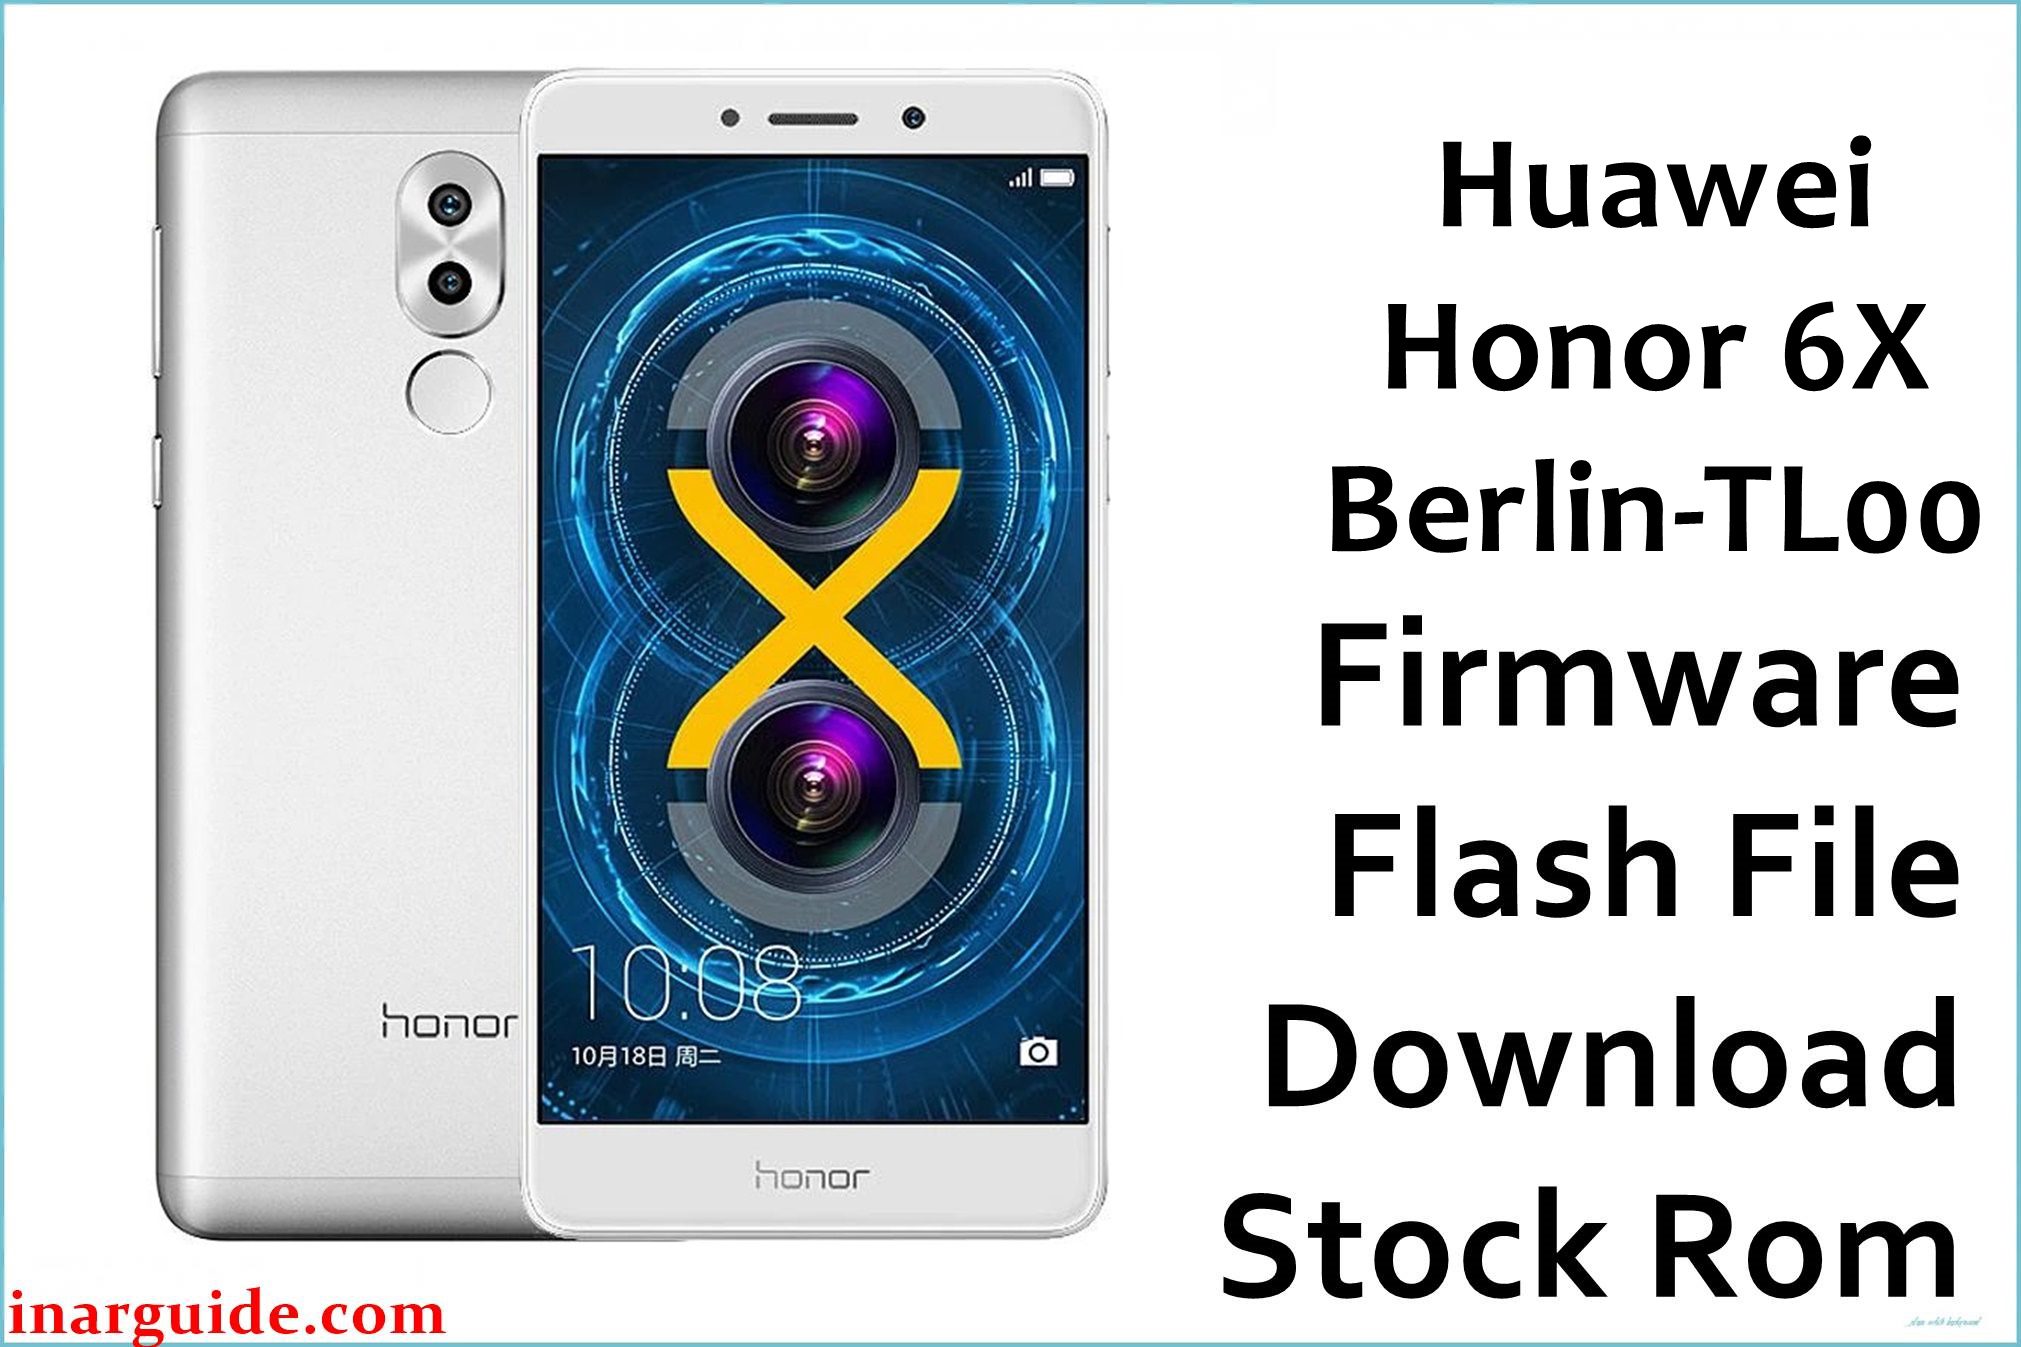 Huawei Honor 6X Berlin TL00